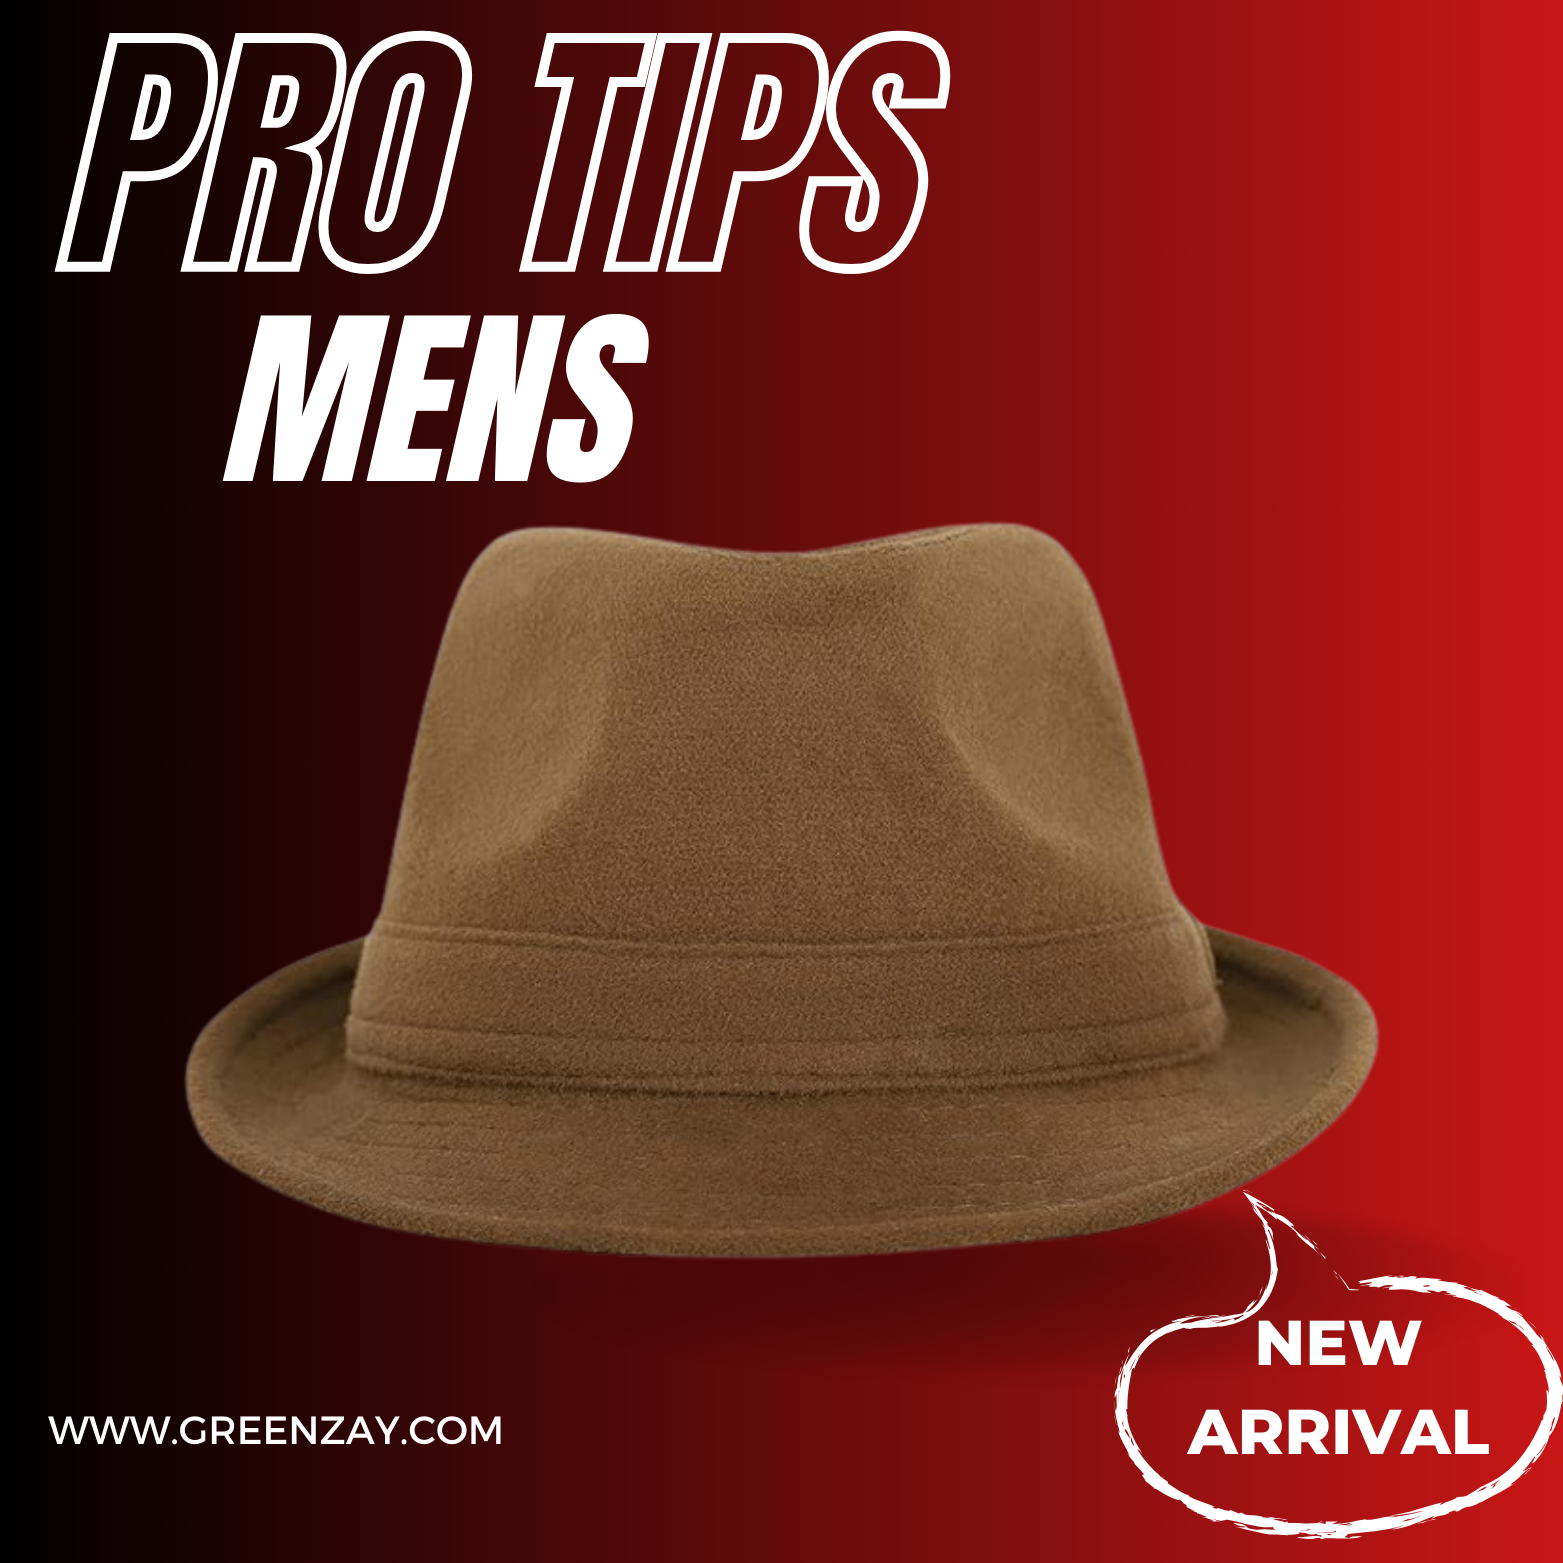 Dressy Hats for Men